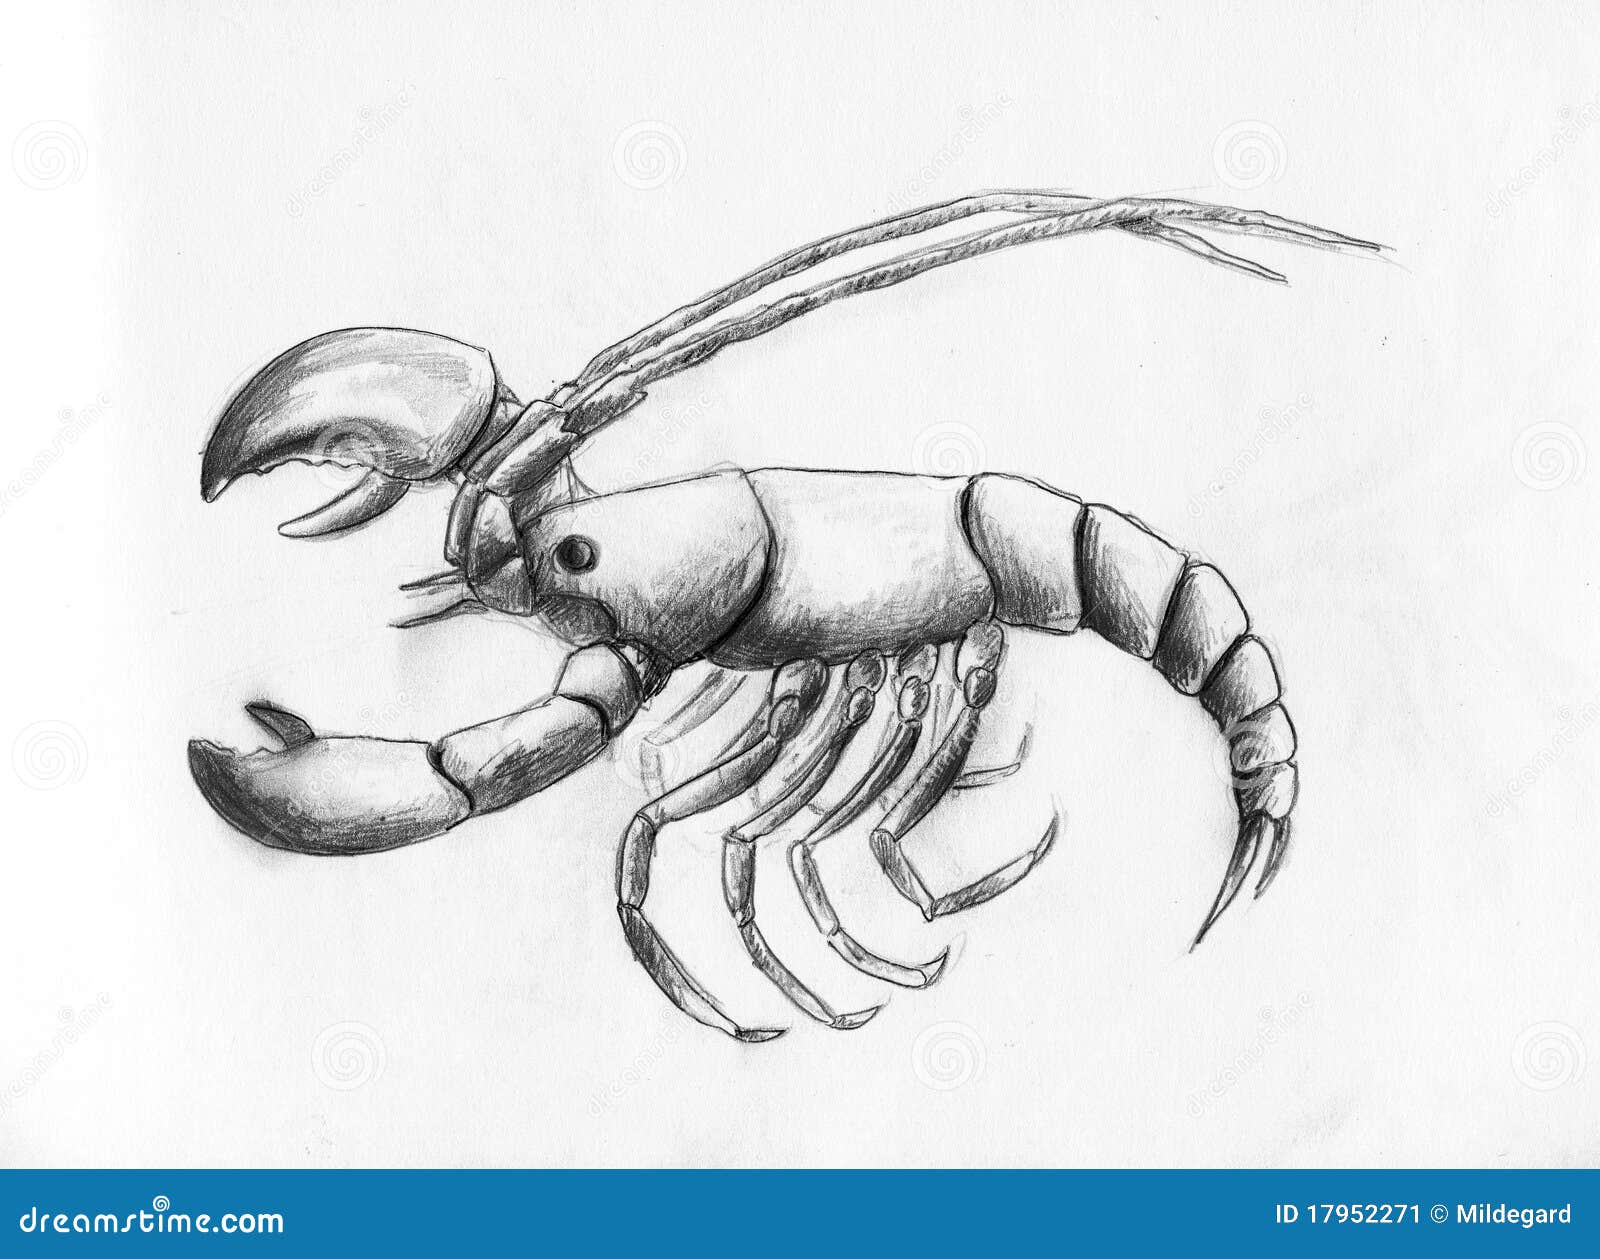 8906 Lobster Sketch Images Stock Photos  Vectors  Shutterstock